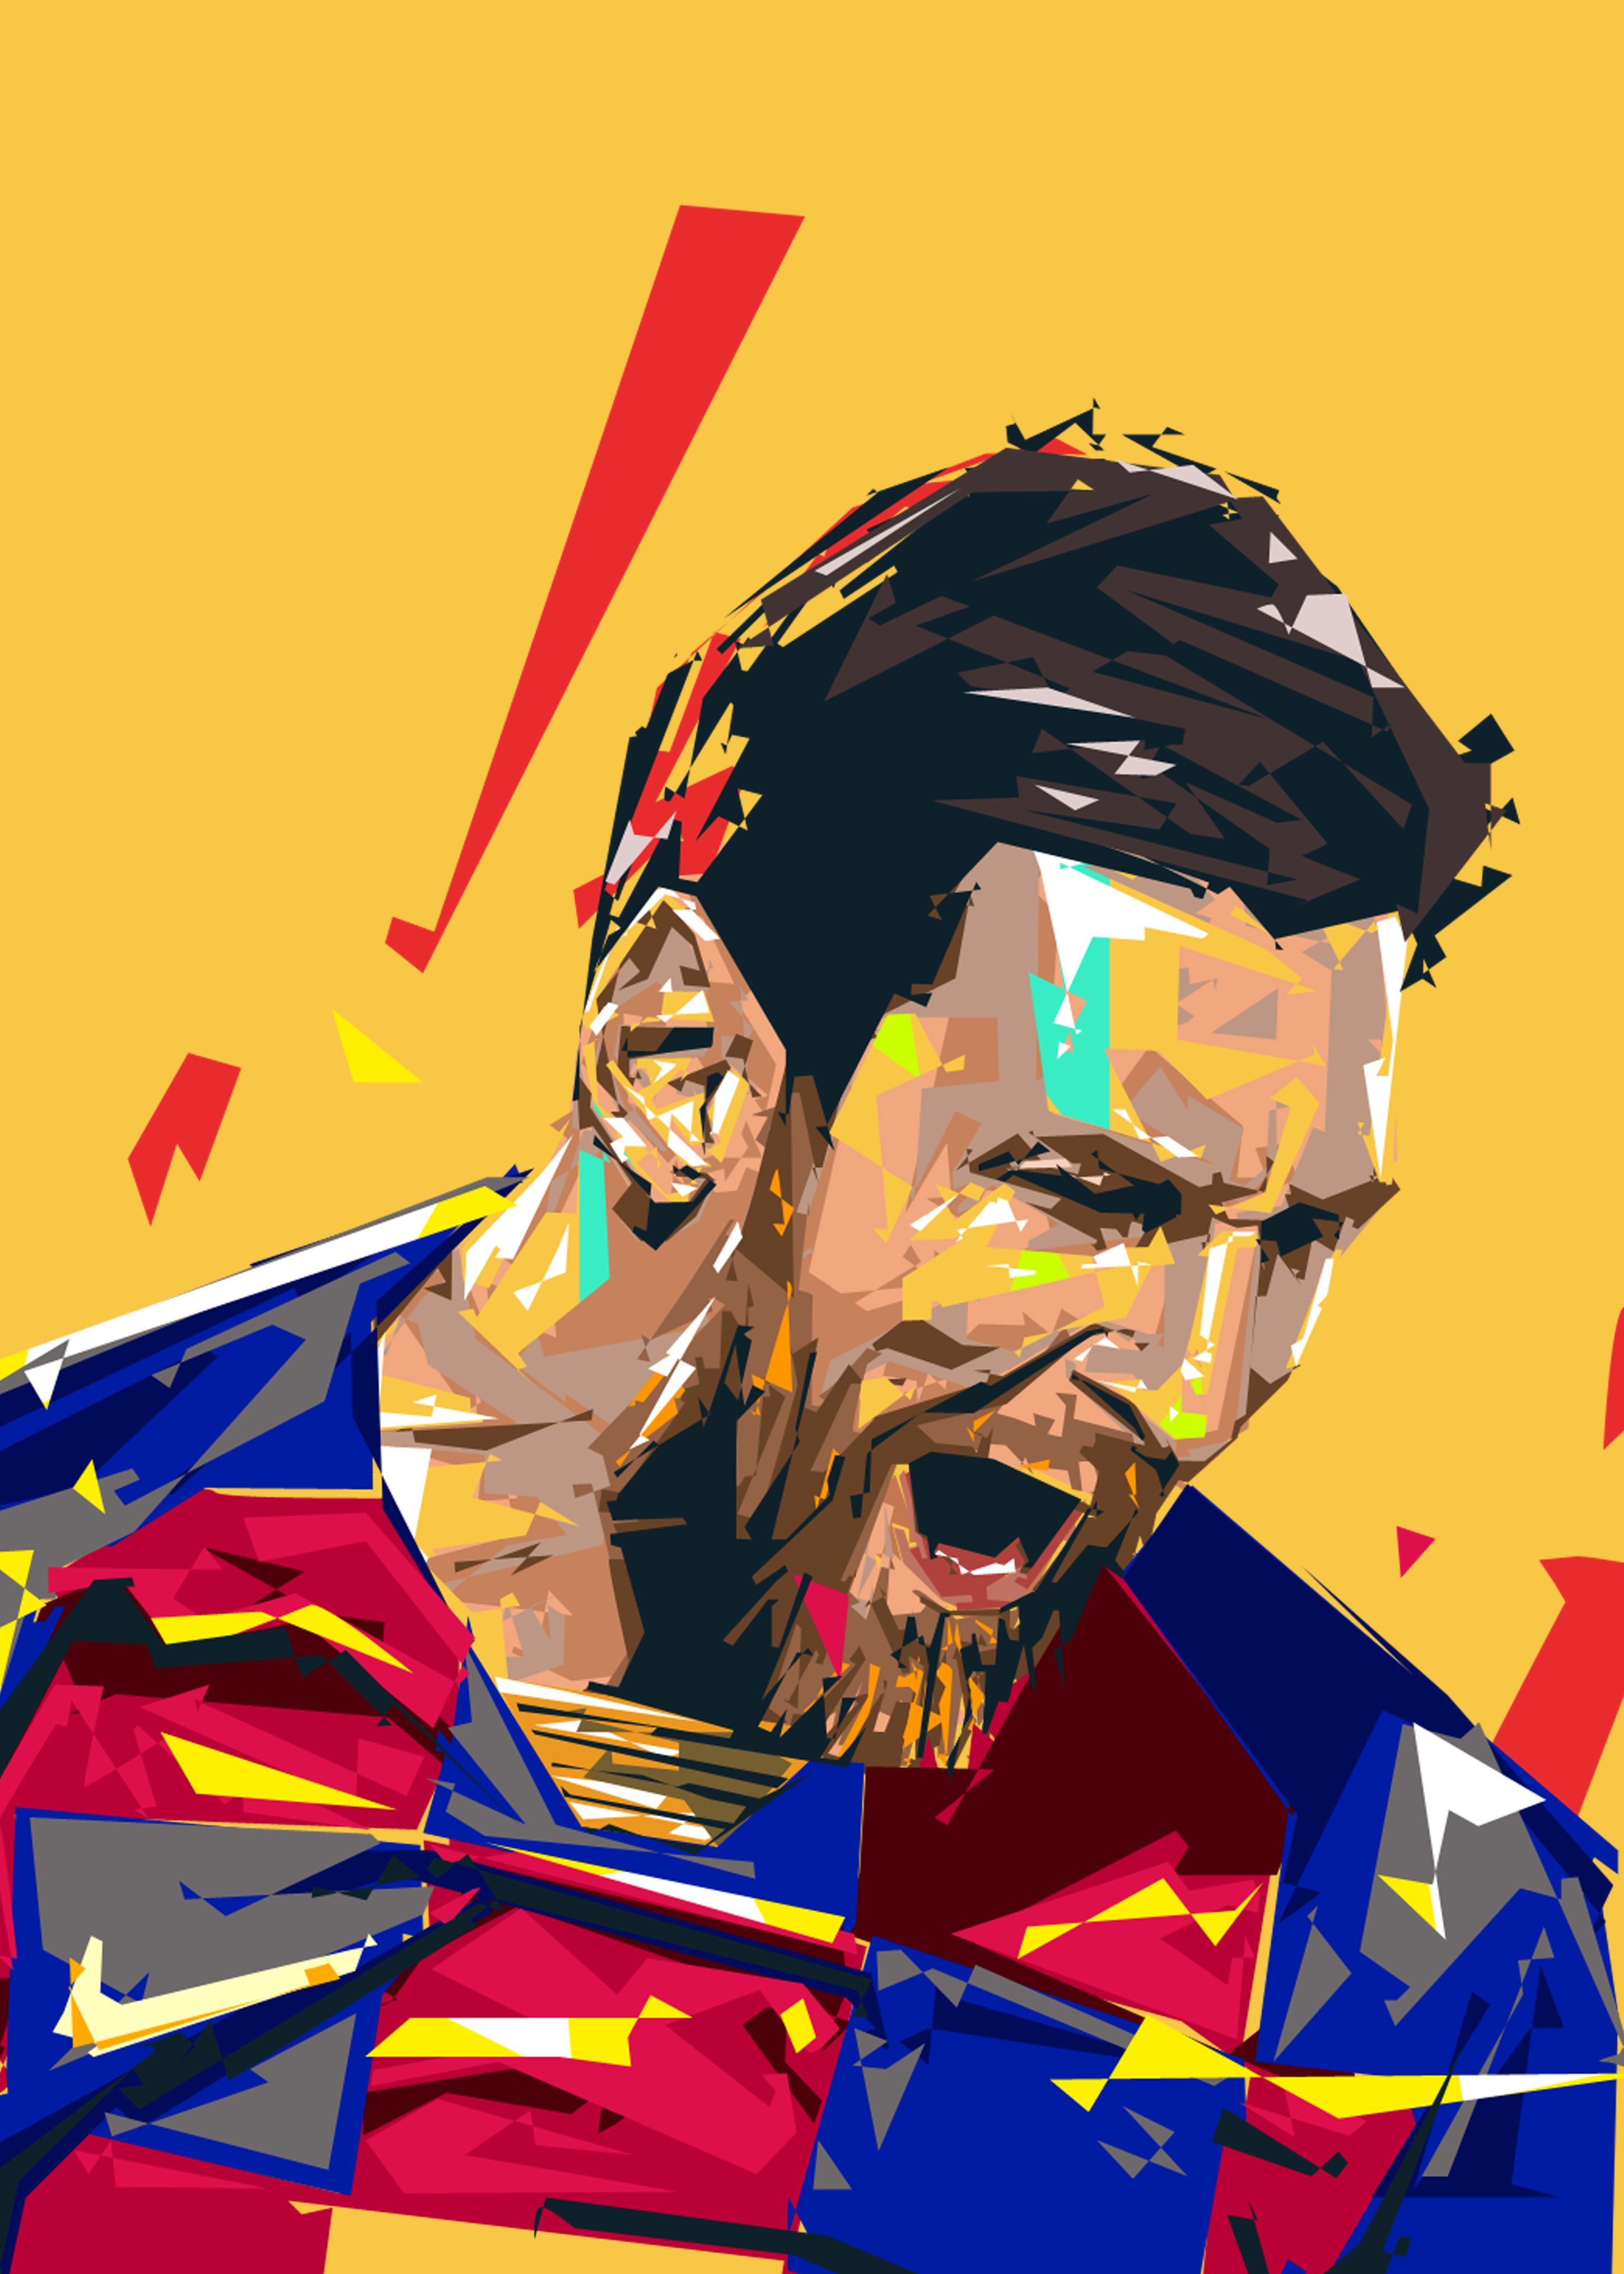 Lionel Messi Digital Art Wallpapers